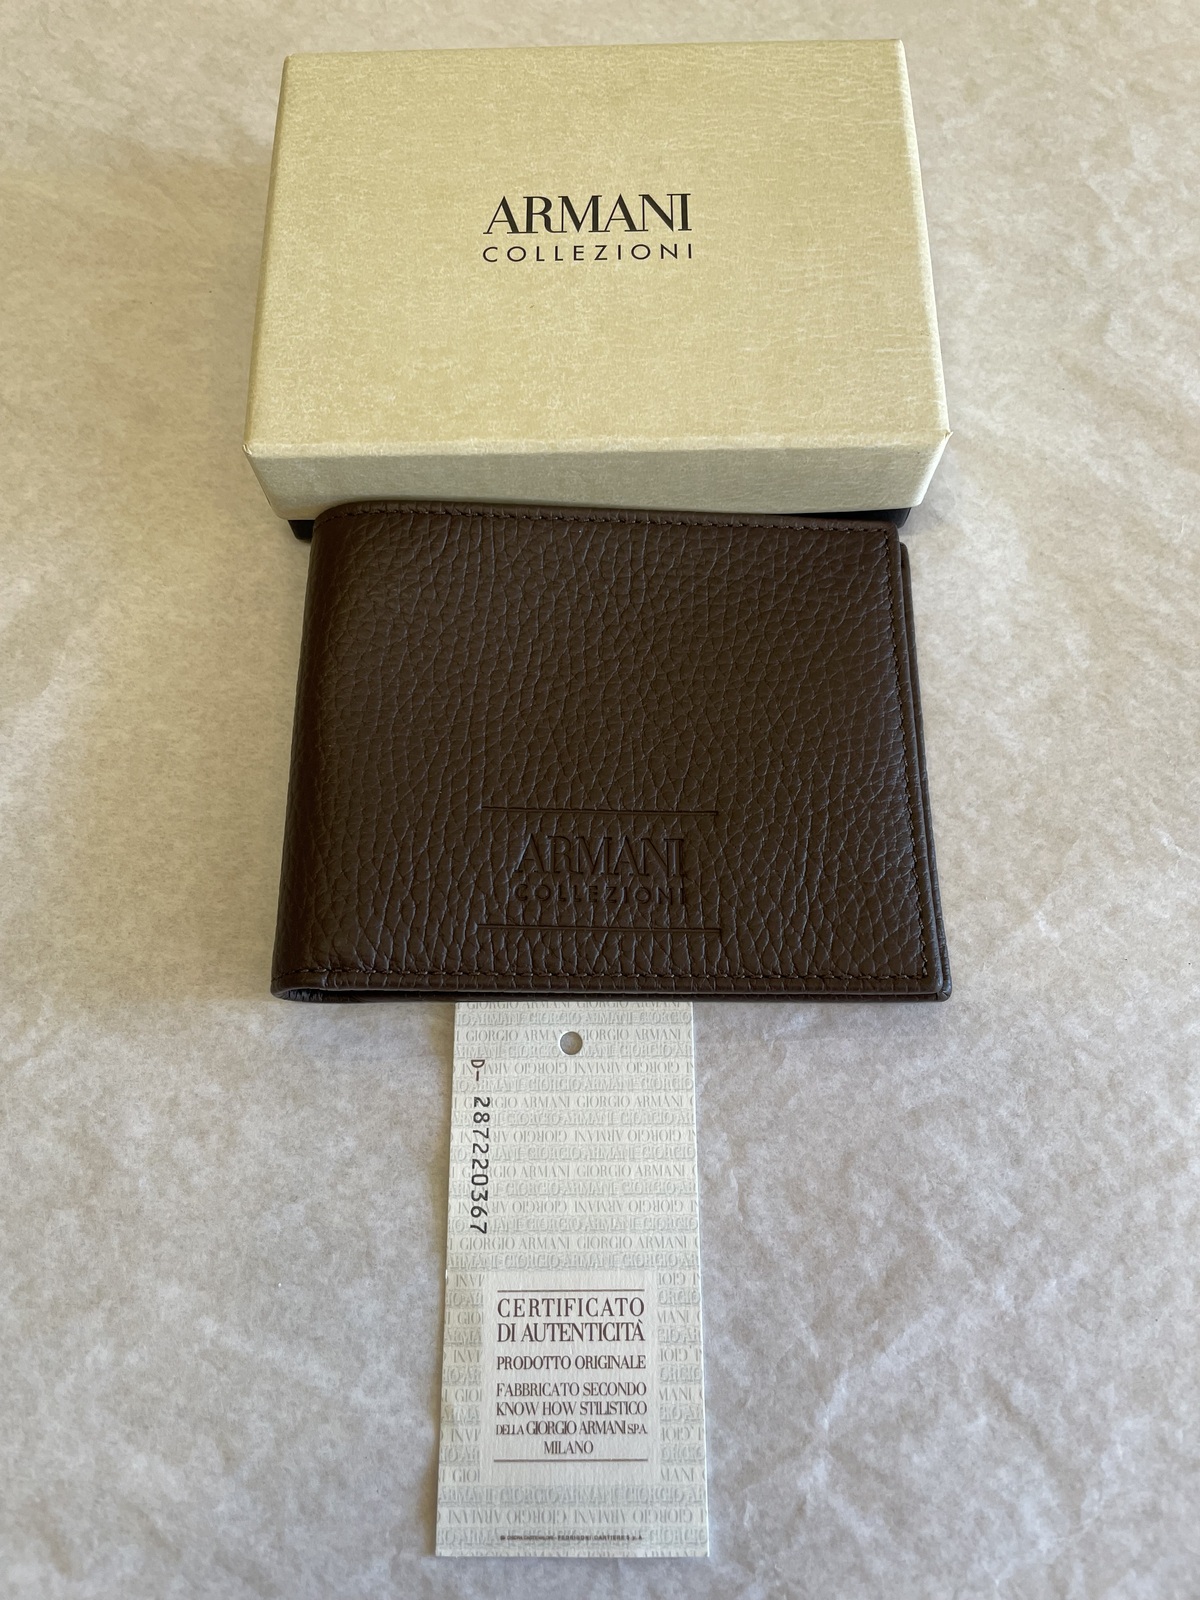 Armani Collezioni Pebble Leather Bifold Wallet, Color Brown  - $100.00